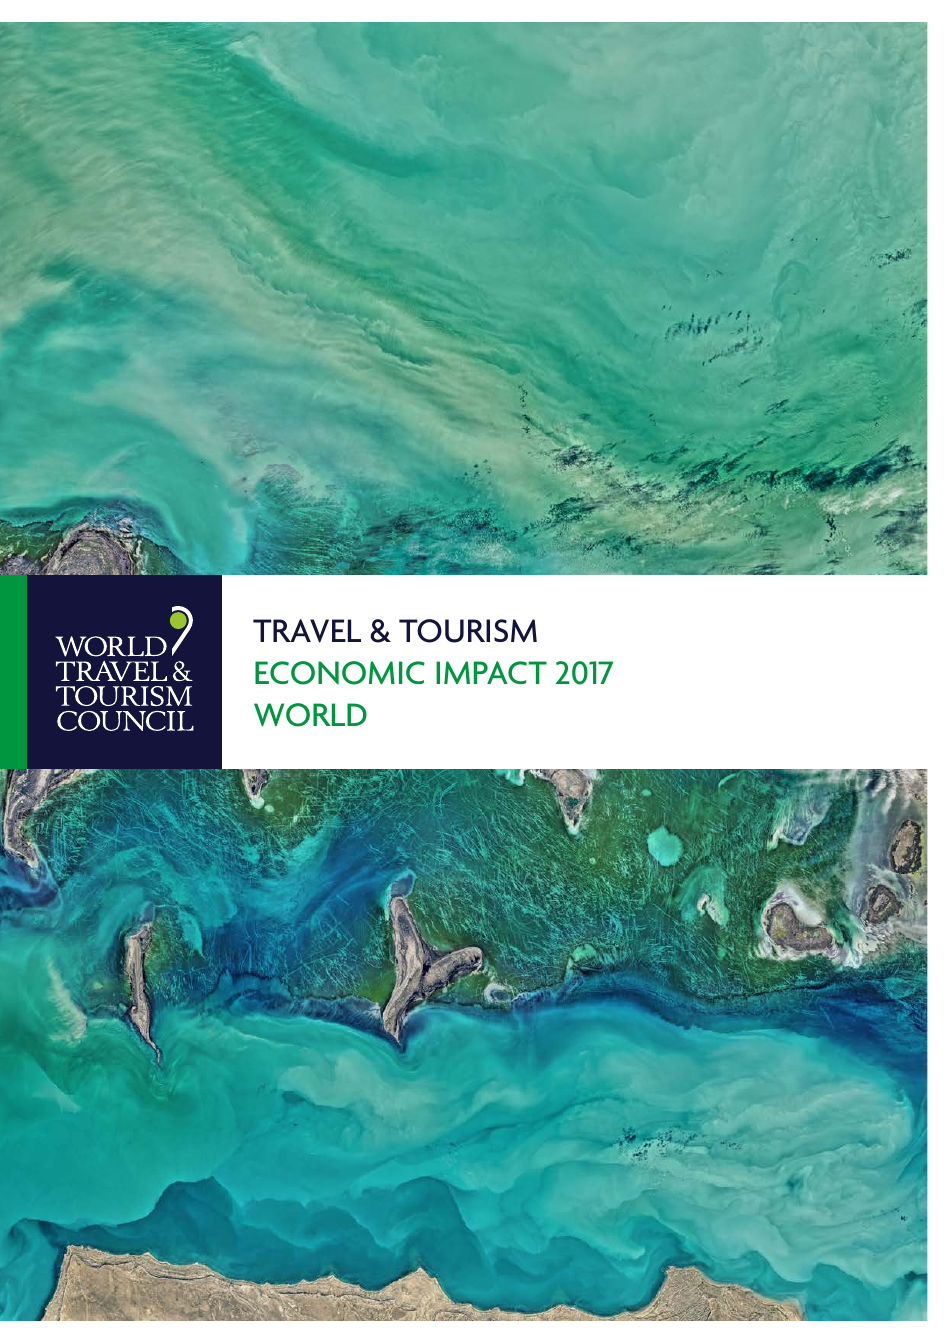 Illustration showcasing the Travel & Tourism Economic Impact